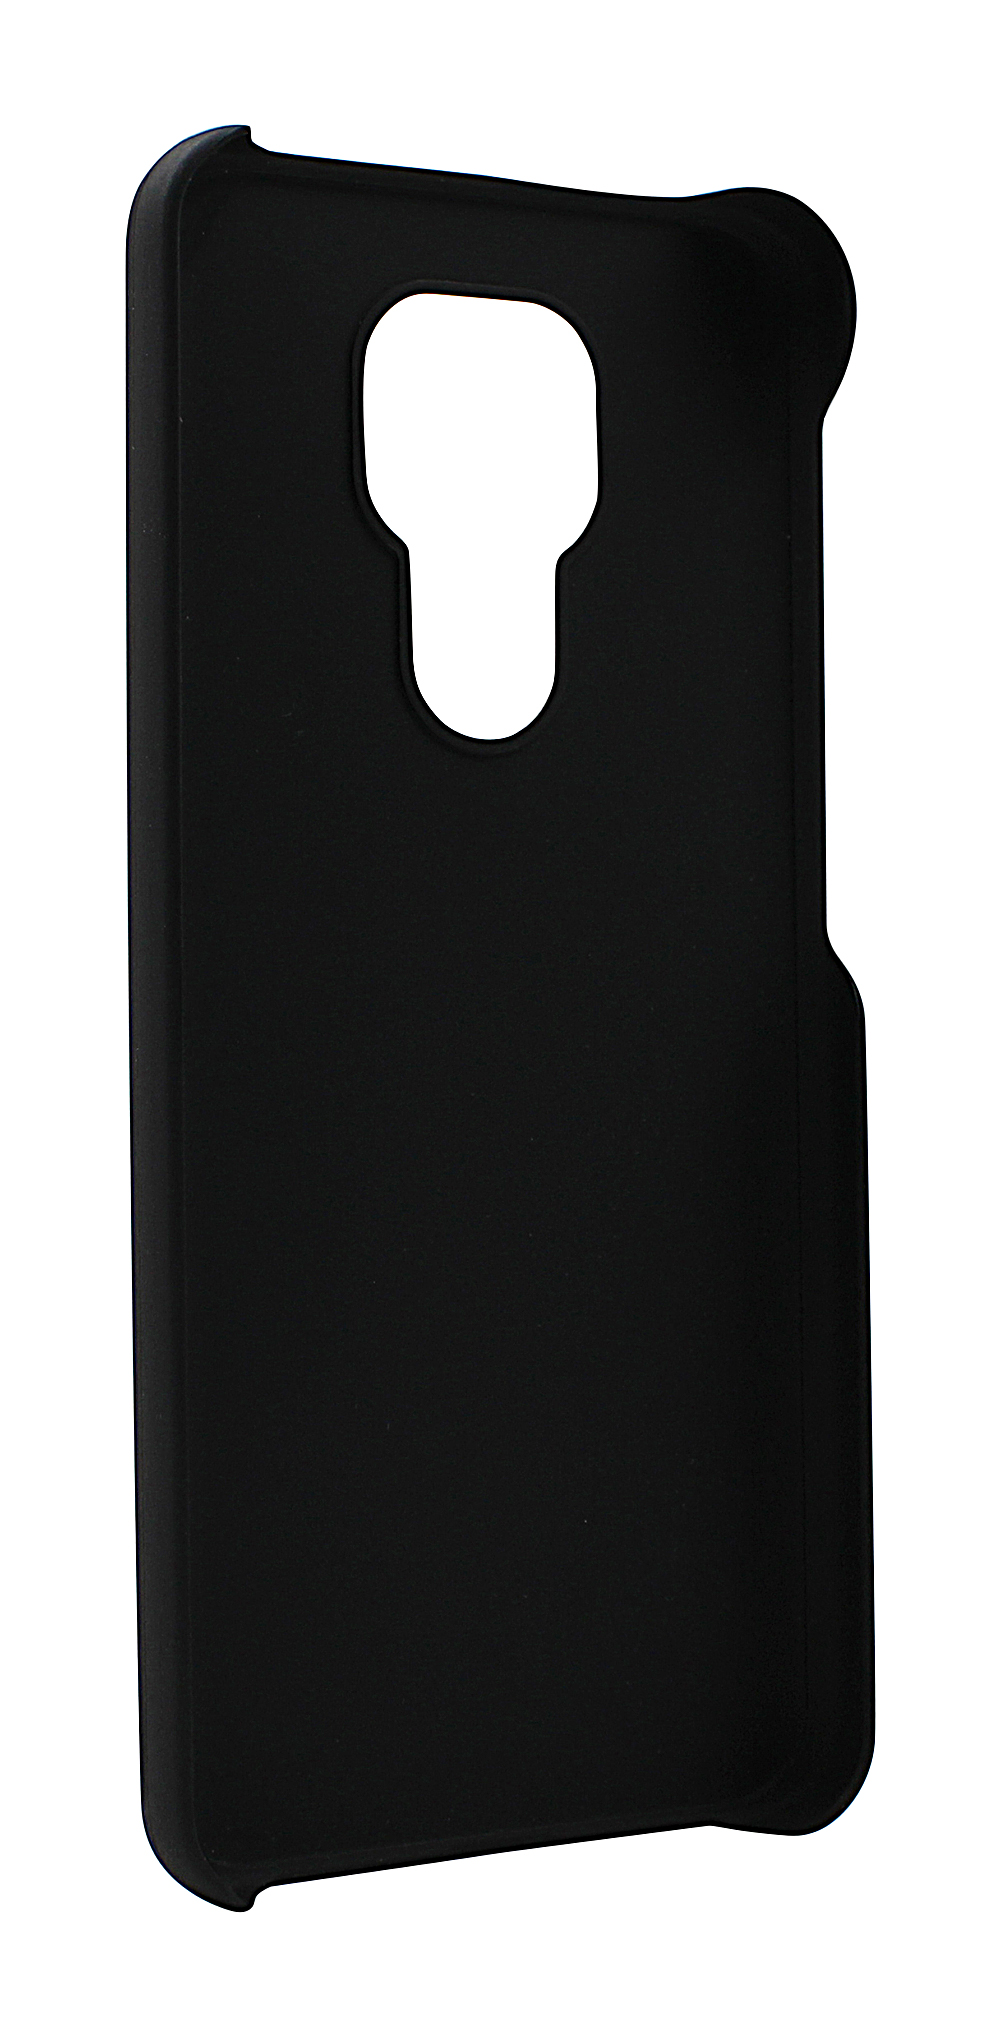 CoverInSkimblocker Magnet Fodral Motorola Moto E7 Plus (XT2081-2)